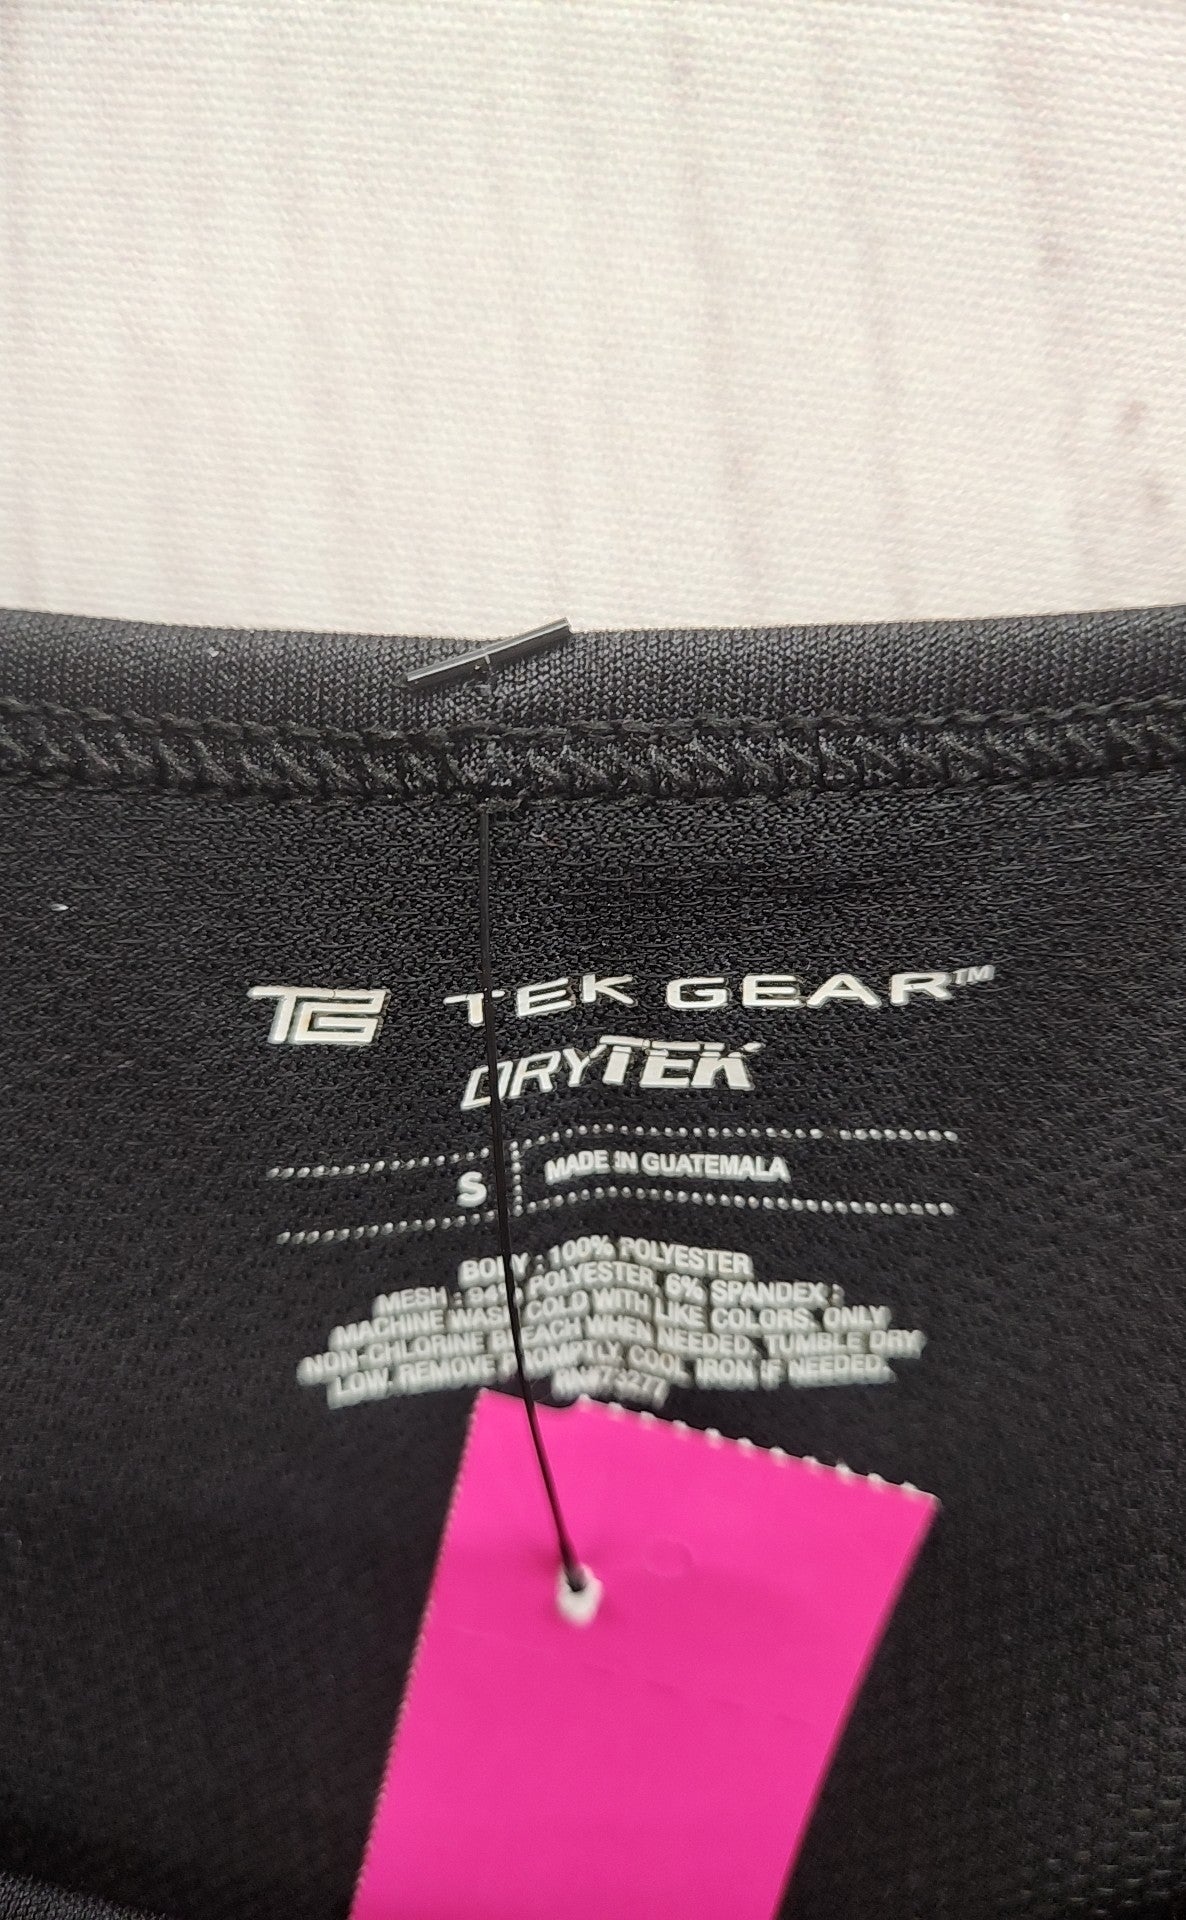 Tek Gear Women's Size S Black Sleeveless Top